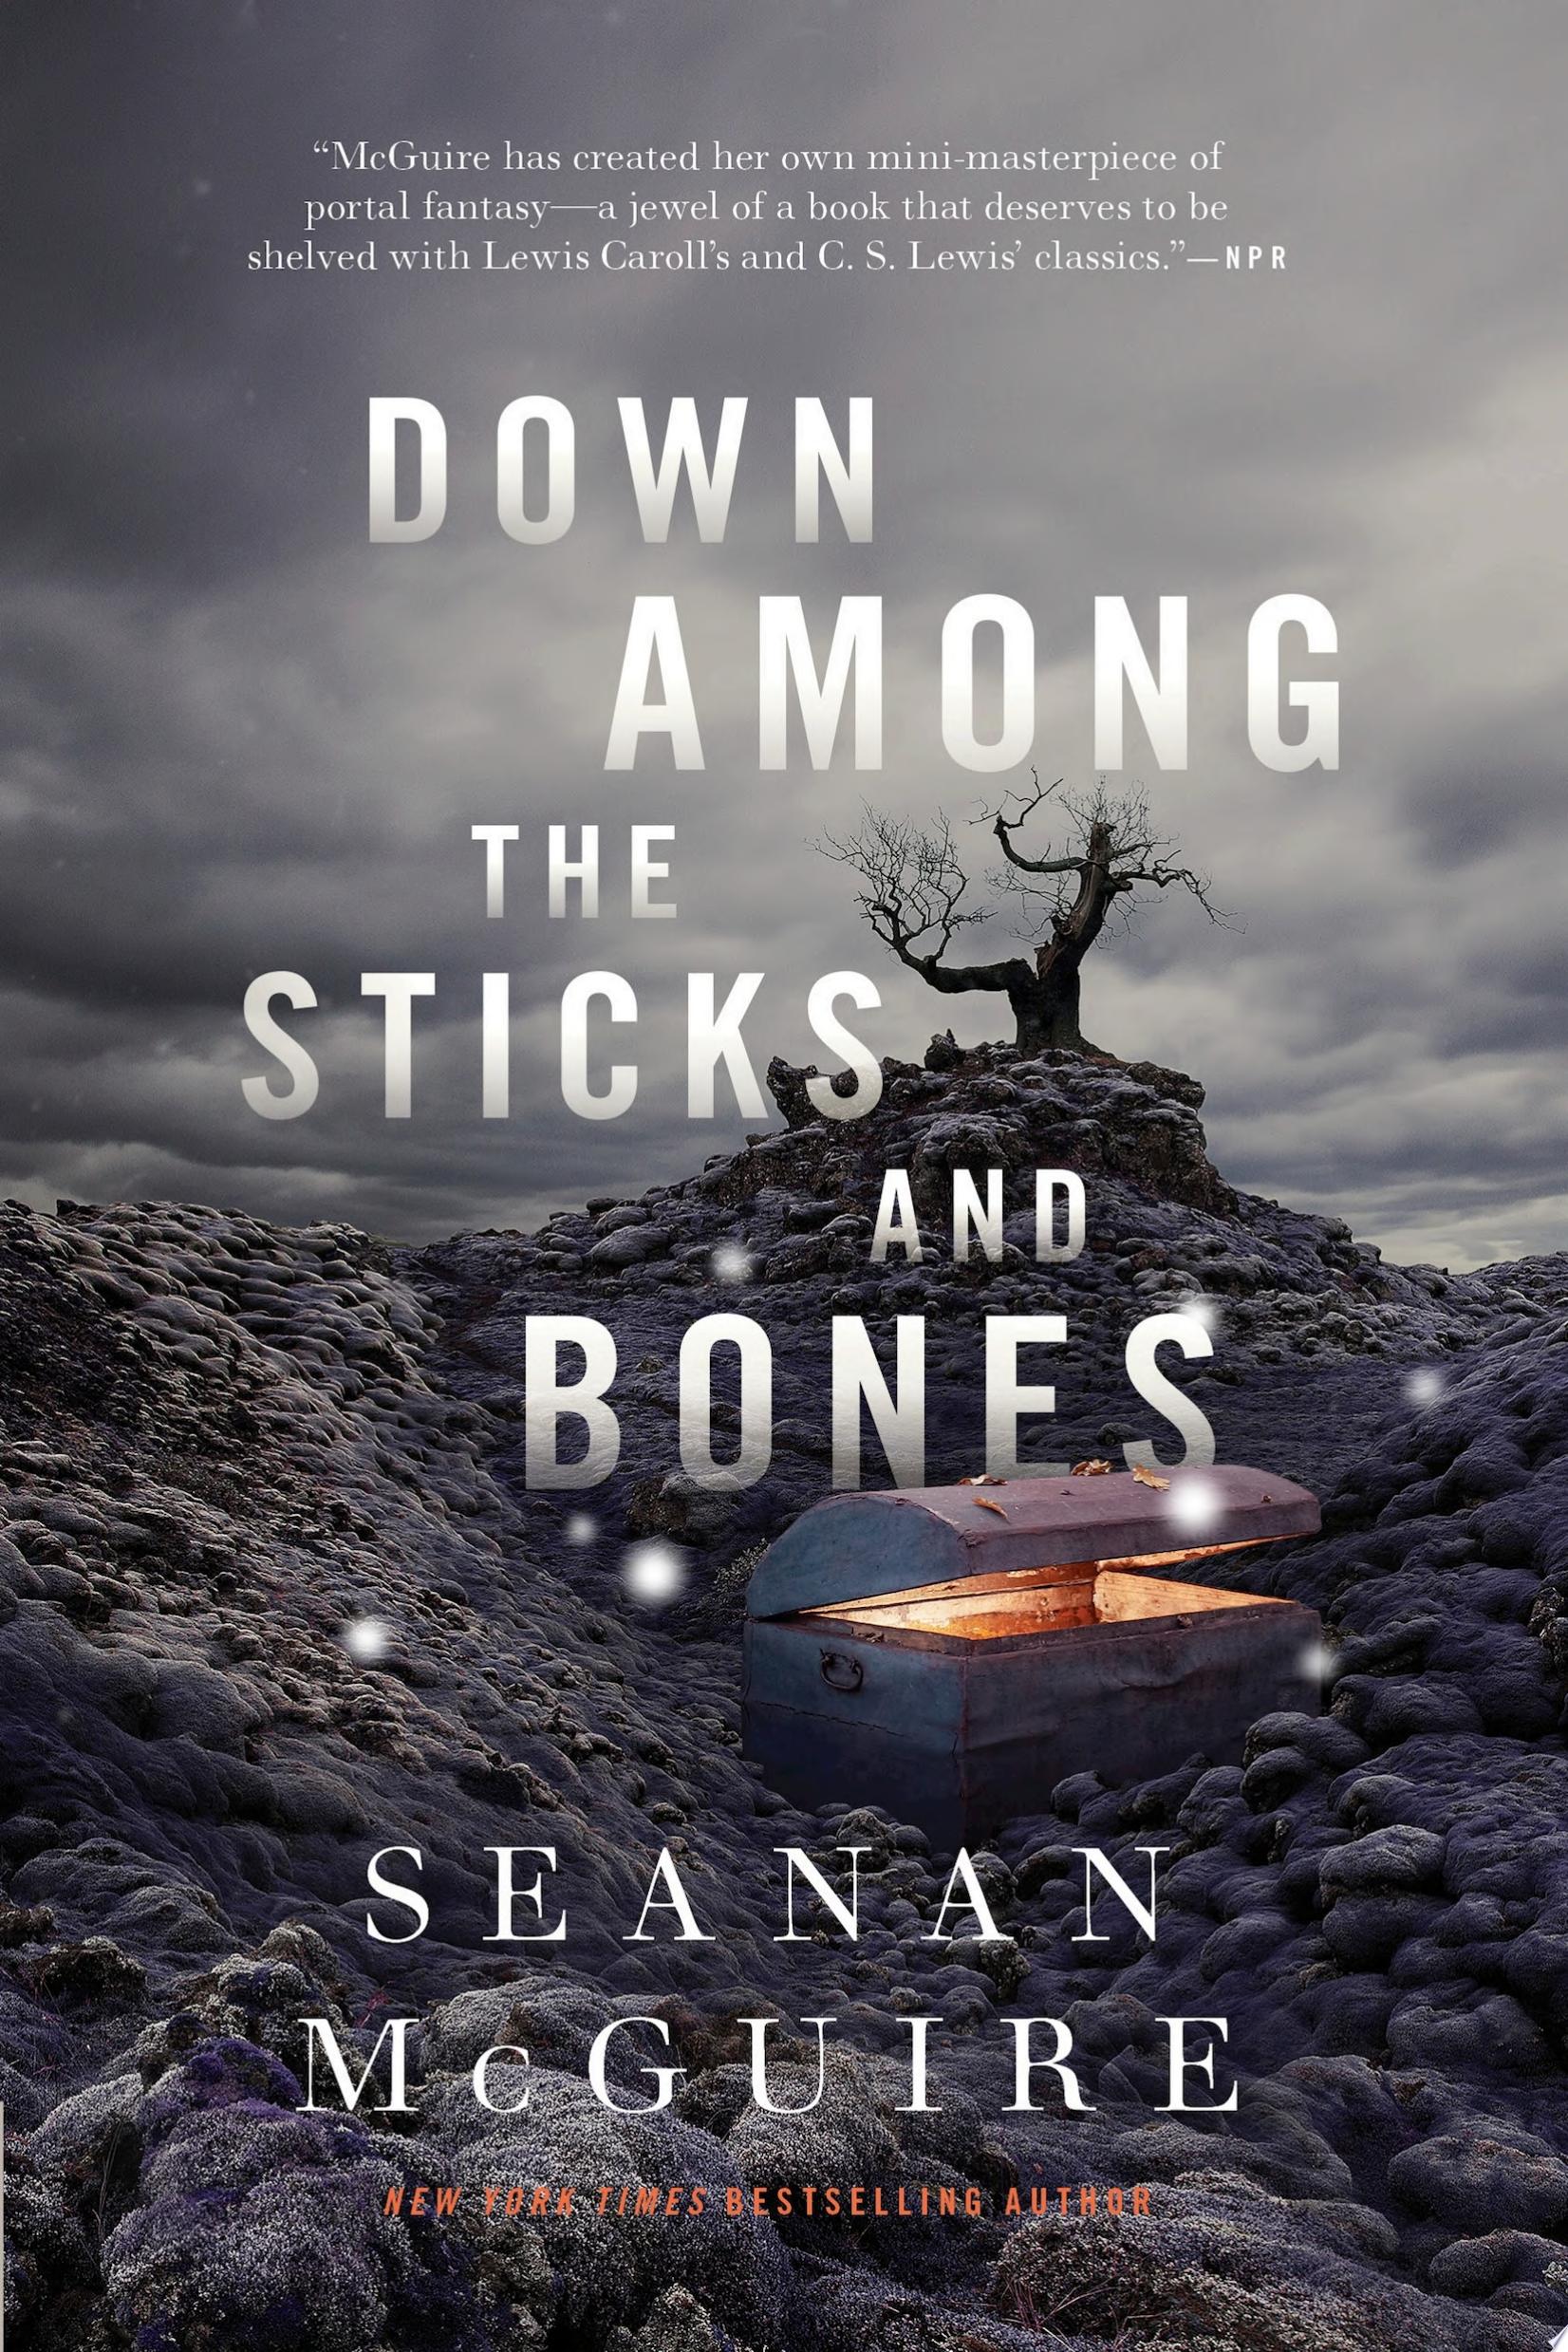 Image for "Down Among the Sticks and Bones"